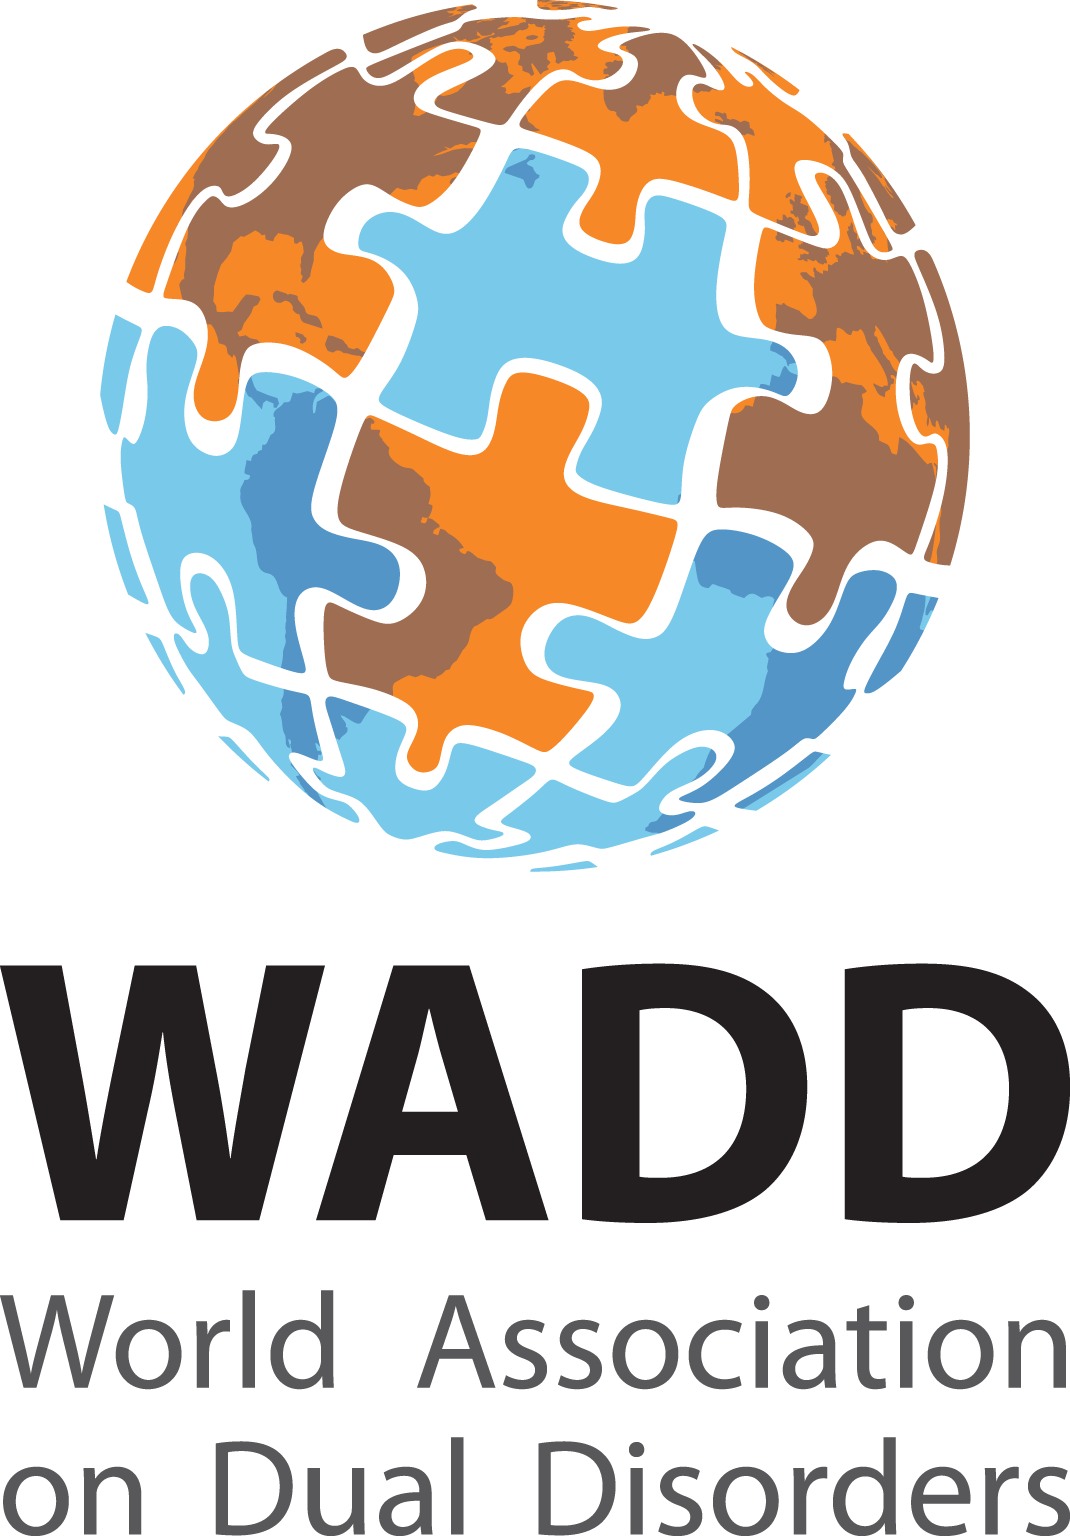 WADD. World Association on Dual Disorders